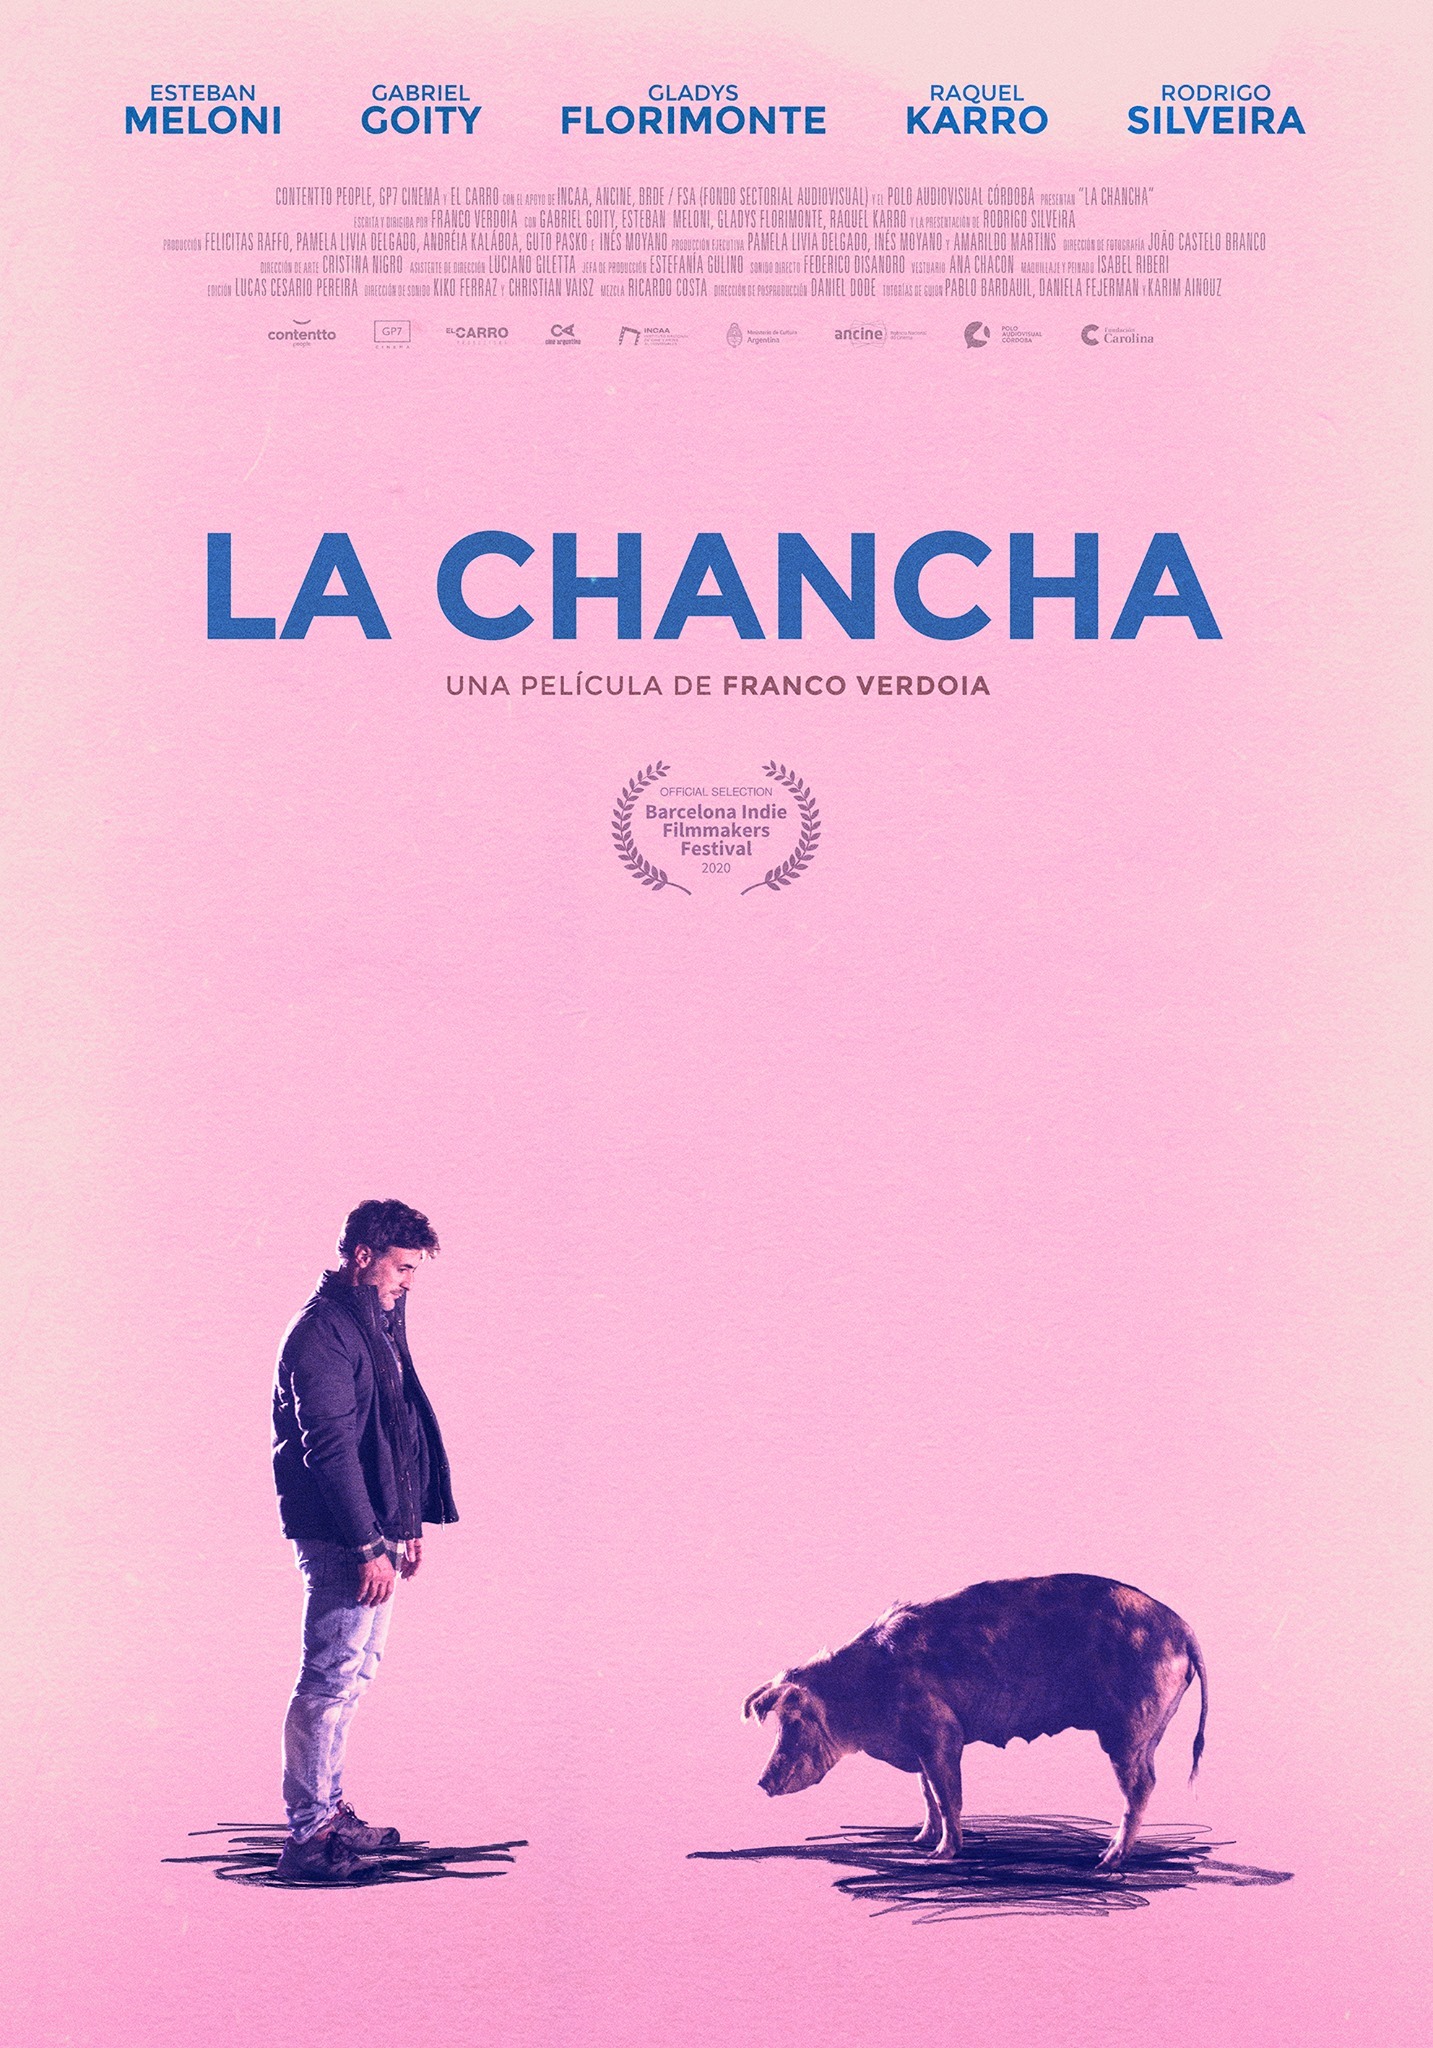 Mega Sized Movie Poster Image for La chancha (#2 of 2)